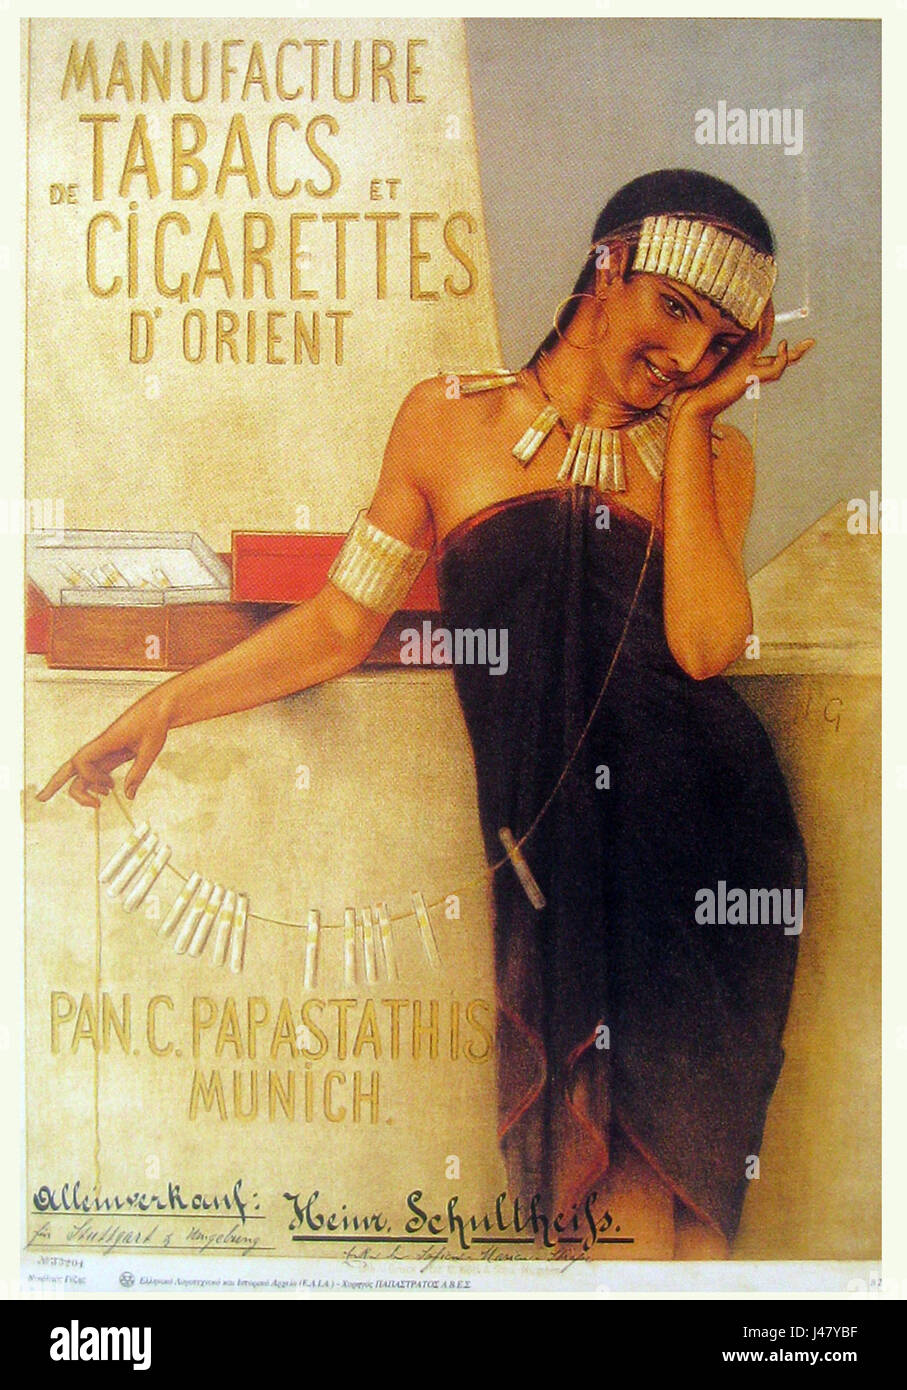 Papastathis cigarettes munich Stock Photo